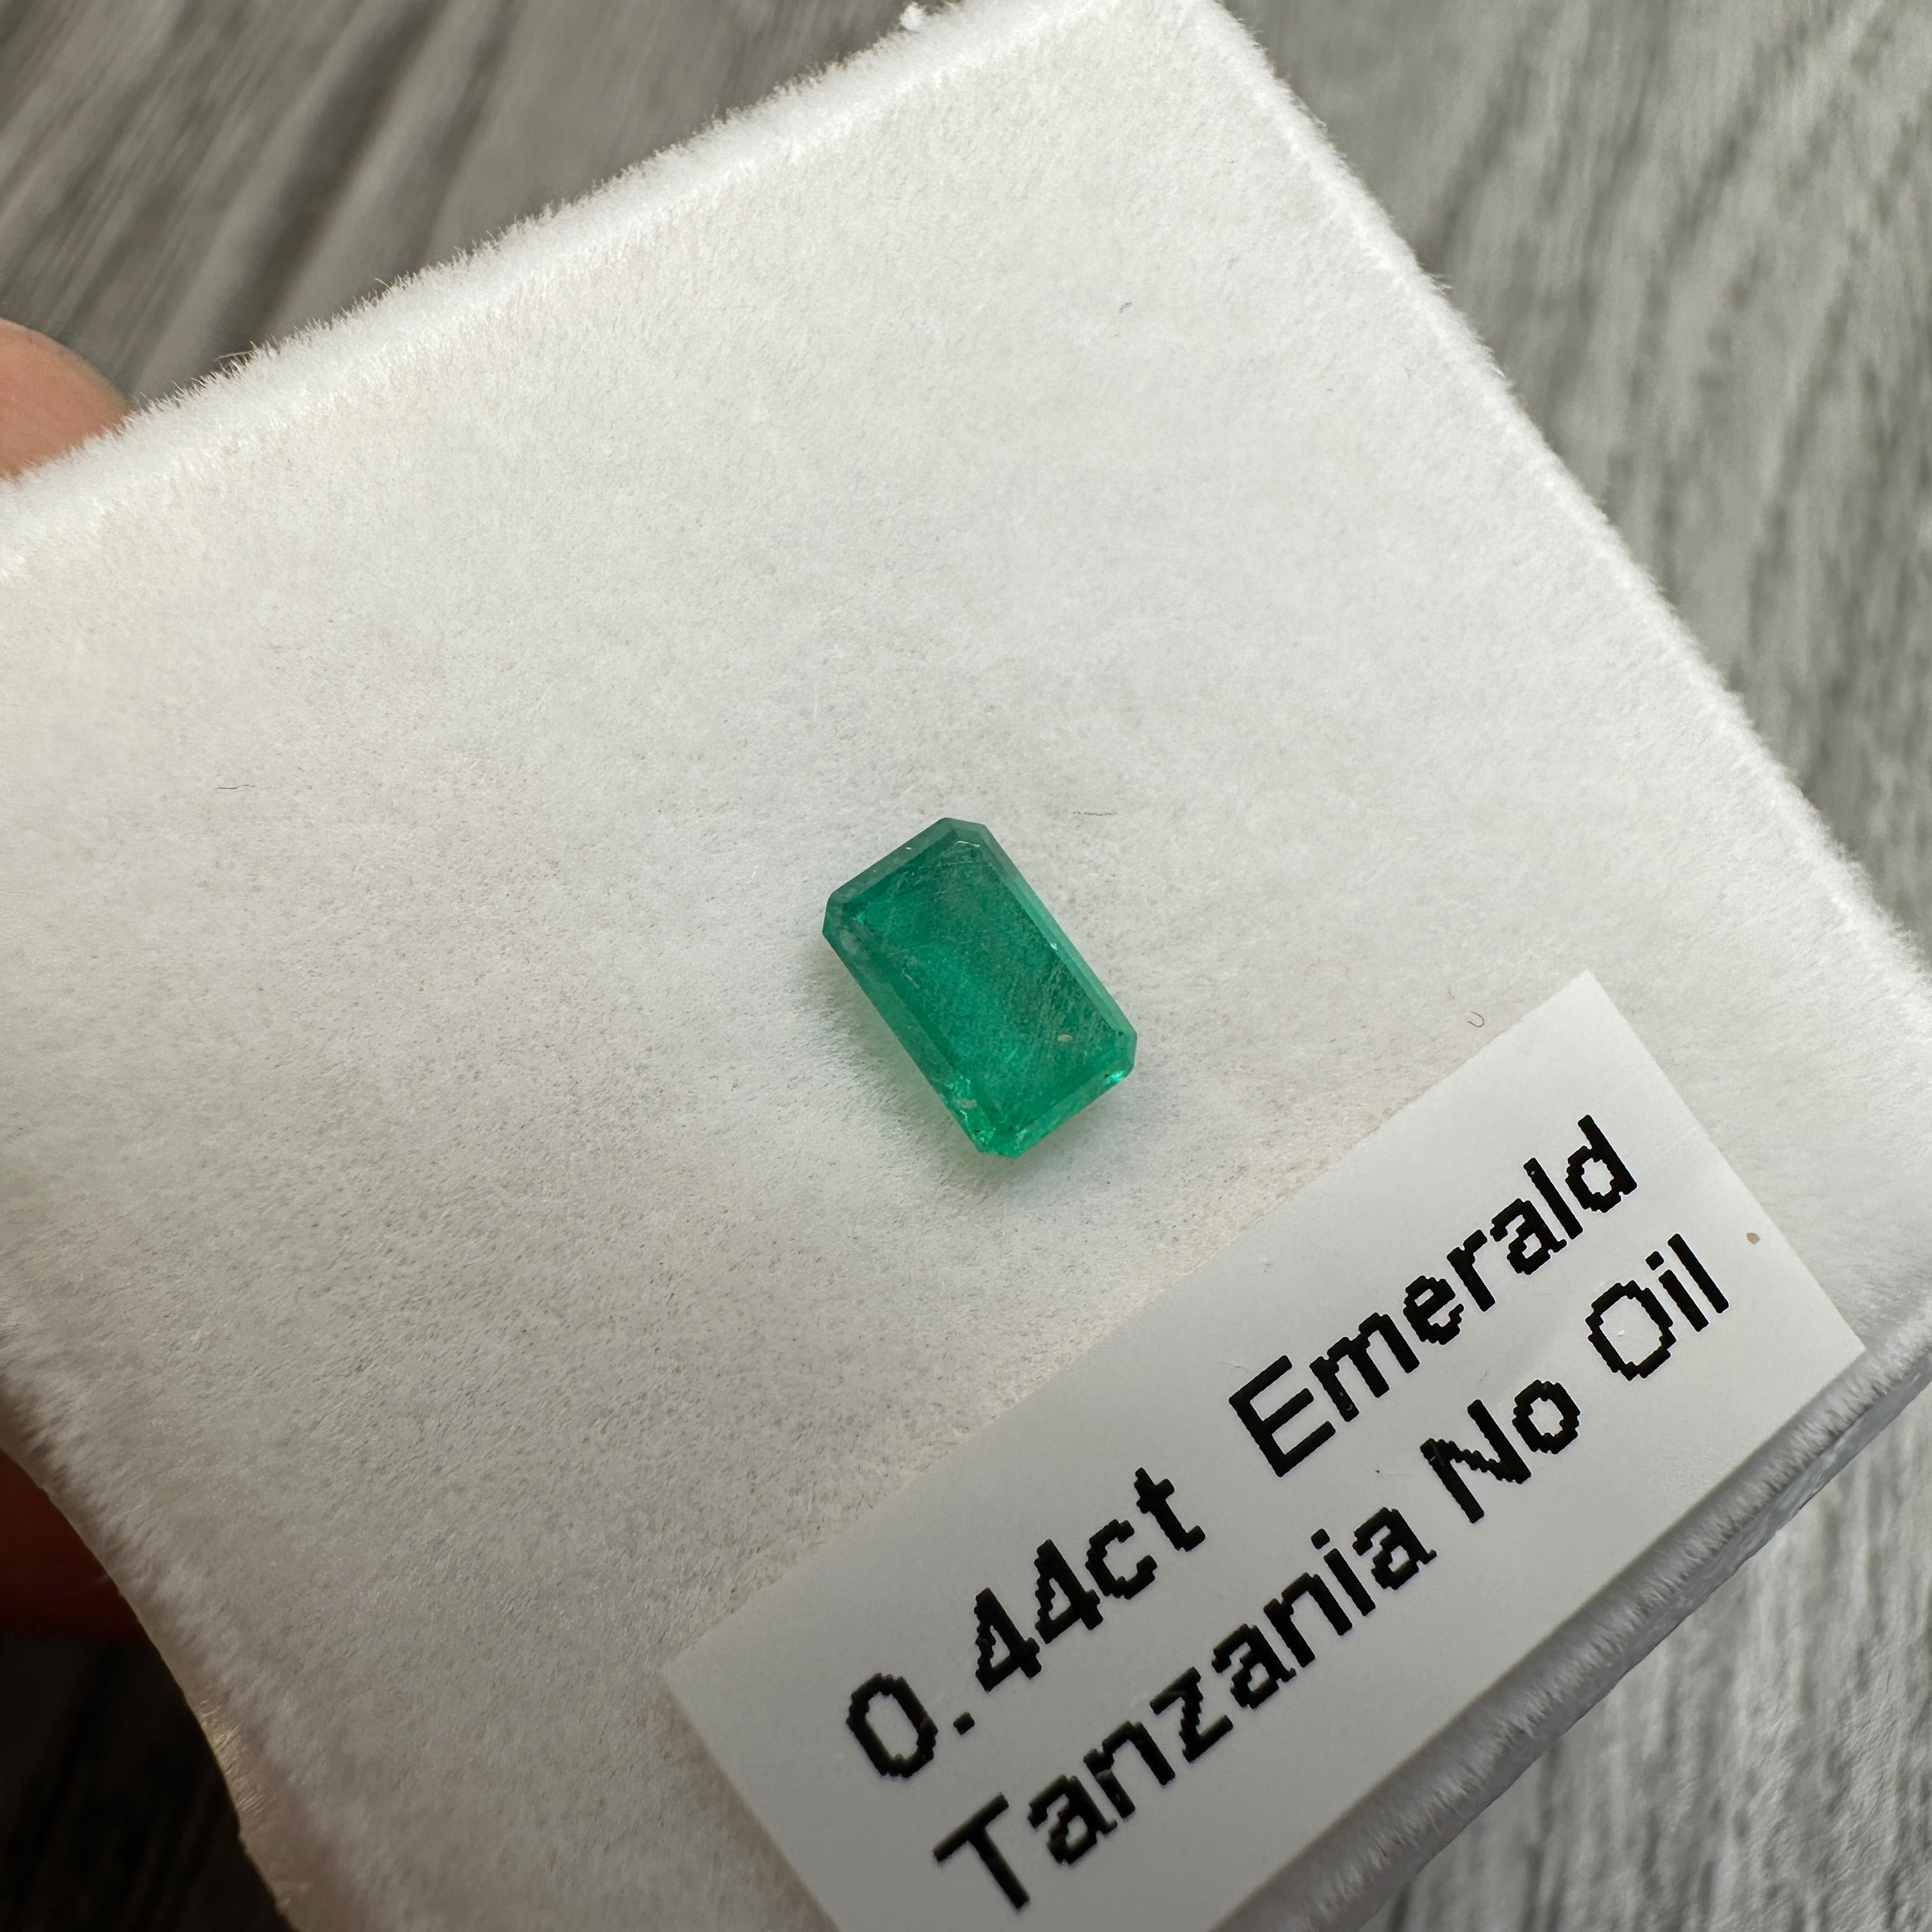 0.44ct Emerald, Tanzania, No Oil, Untreated Unheated